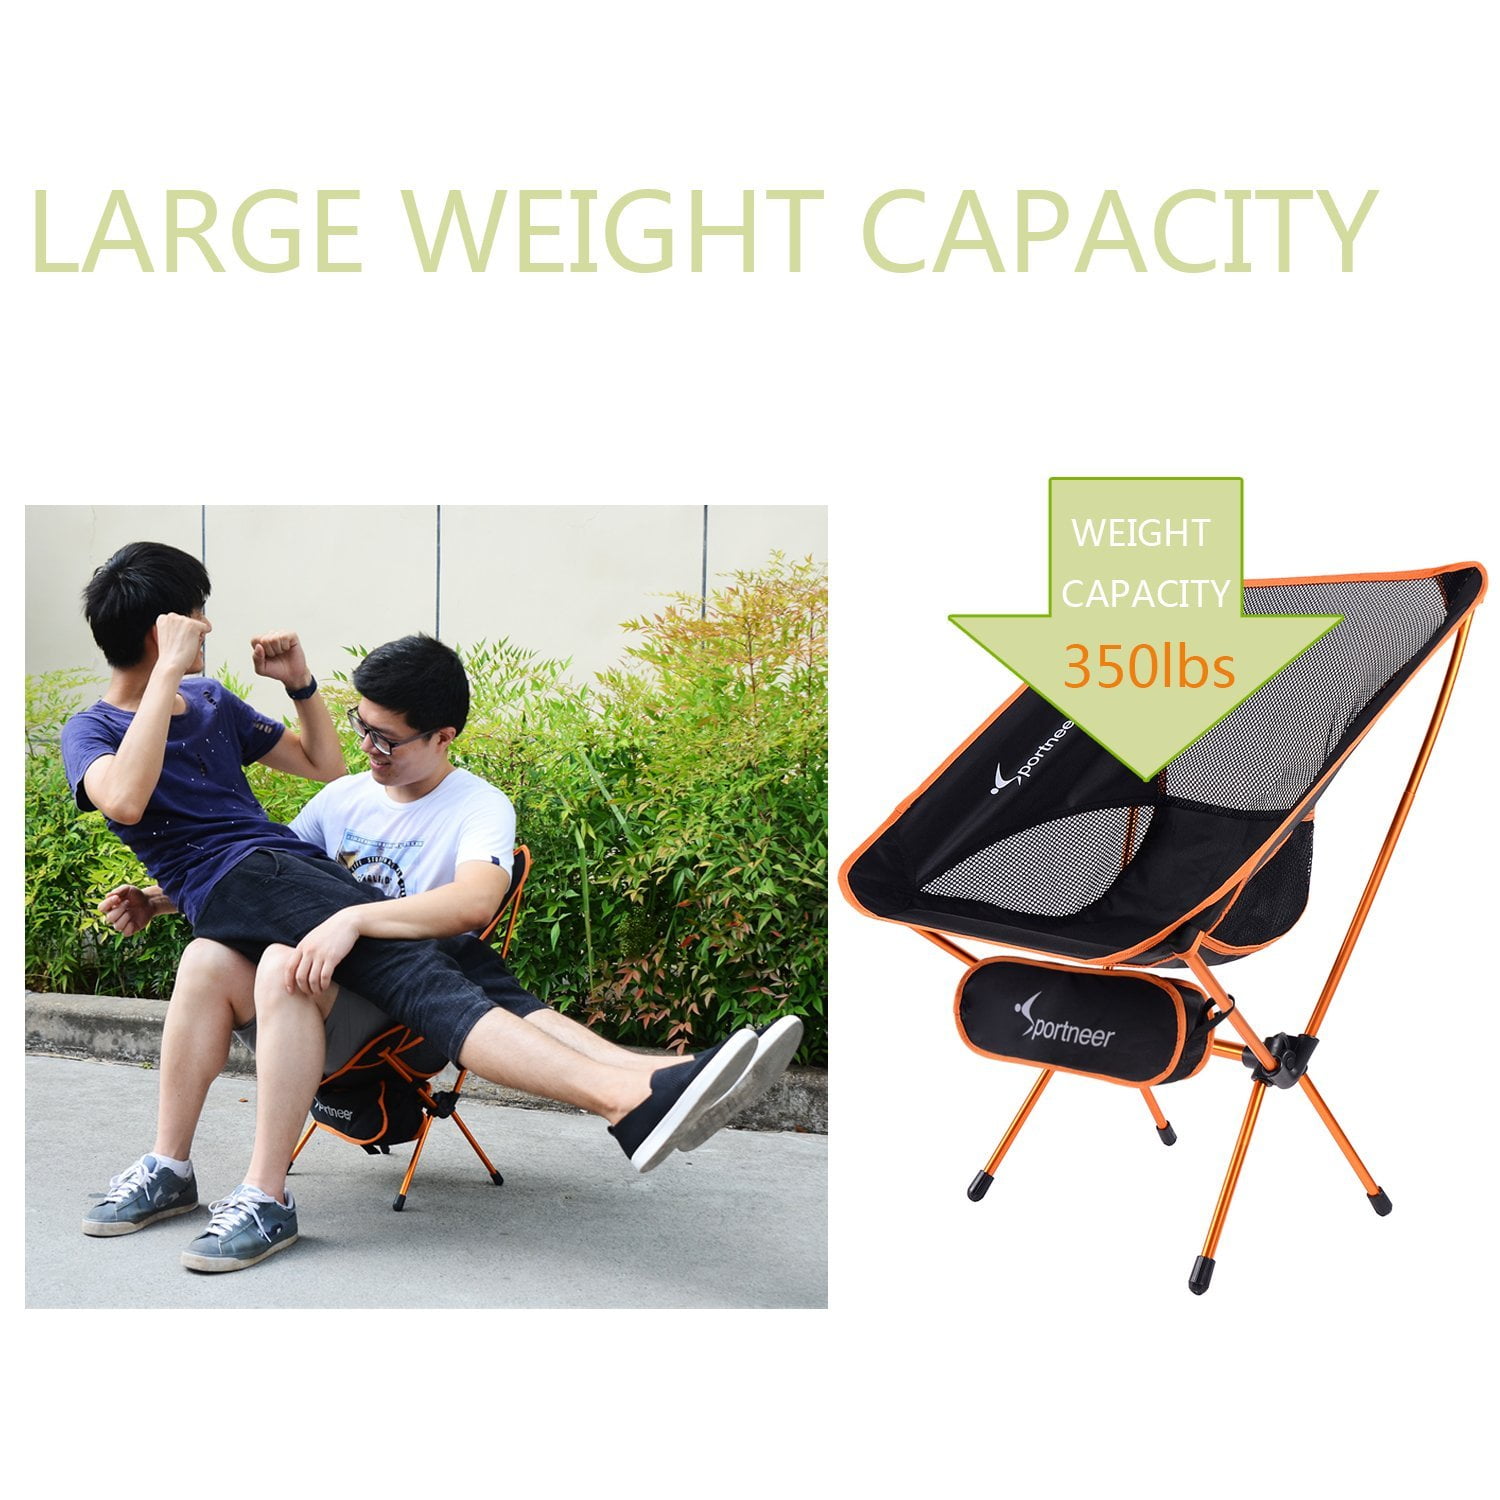 sportneer portable lightweight folding camping chair